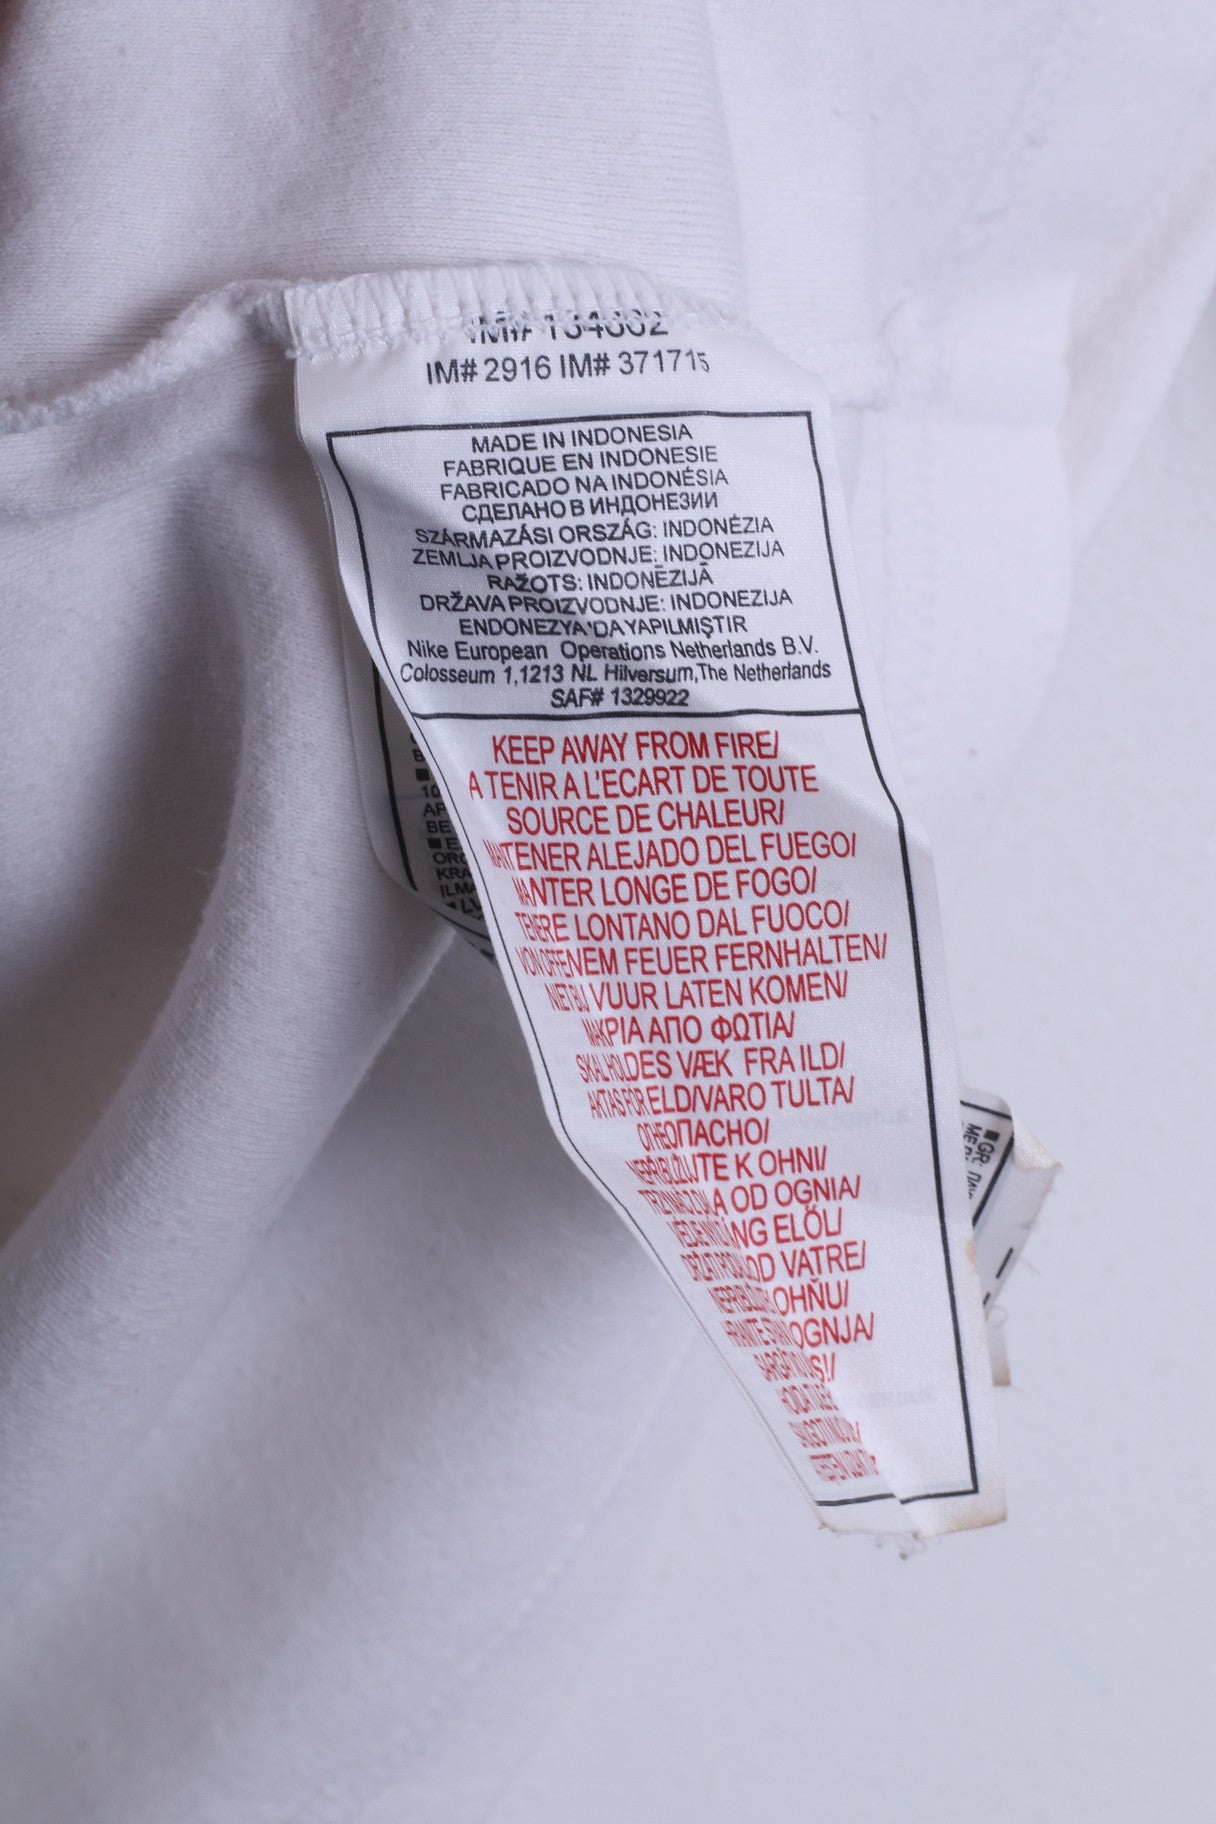 Nike Boys L (152-158)Age12/13 Polo Shirt White Cotton Sport - RetrospectClothes